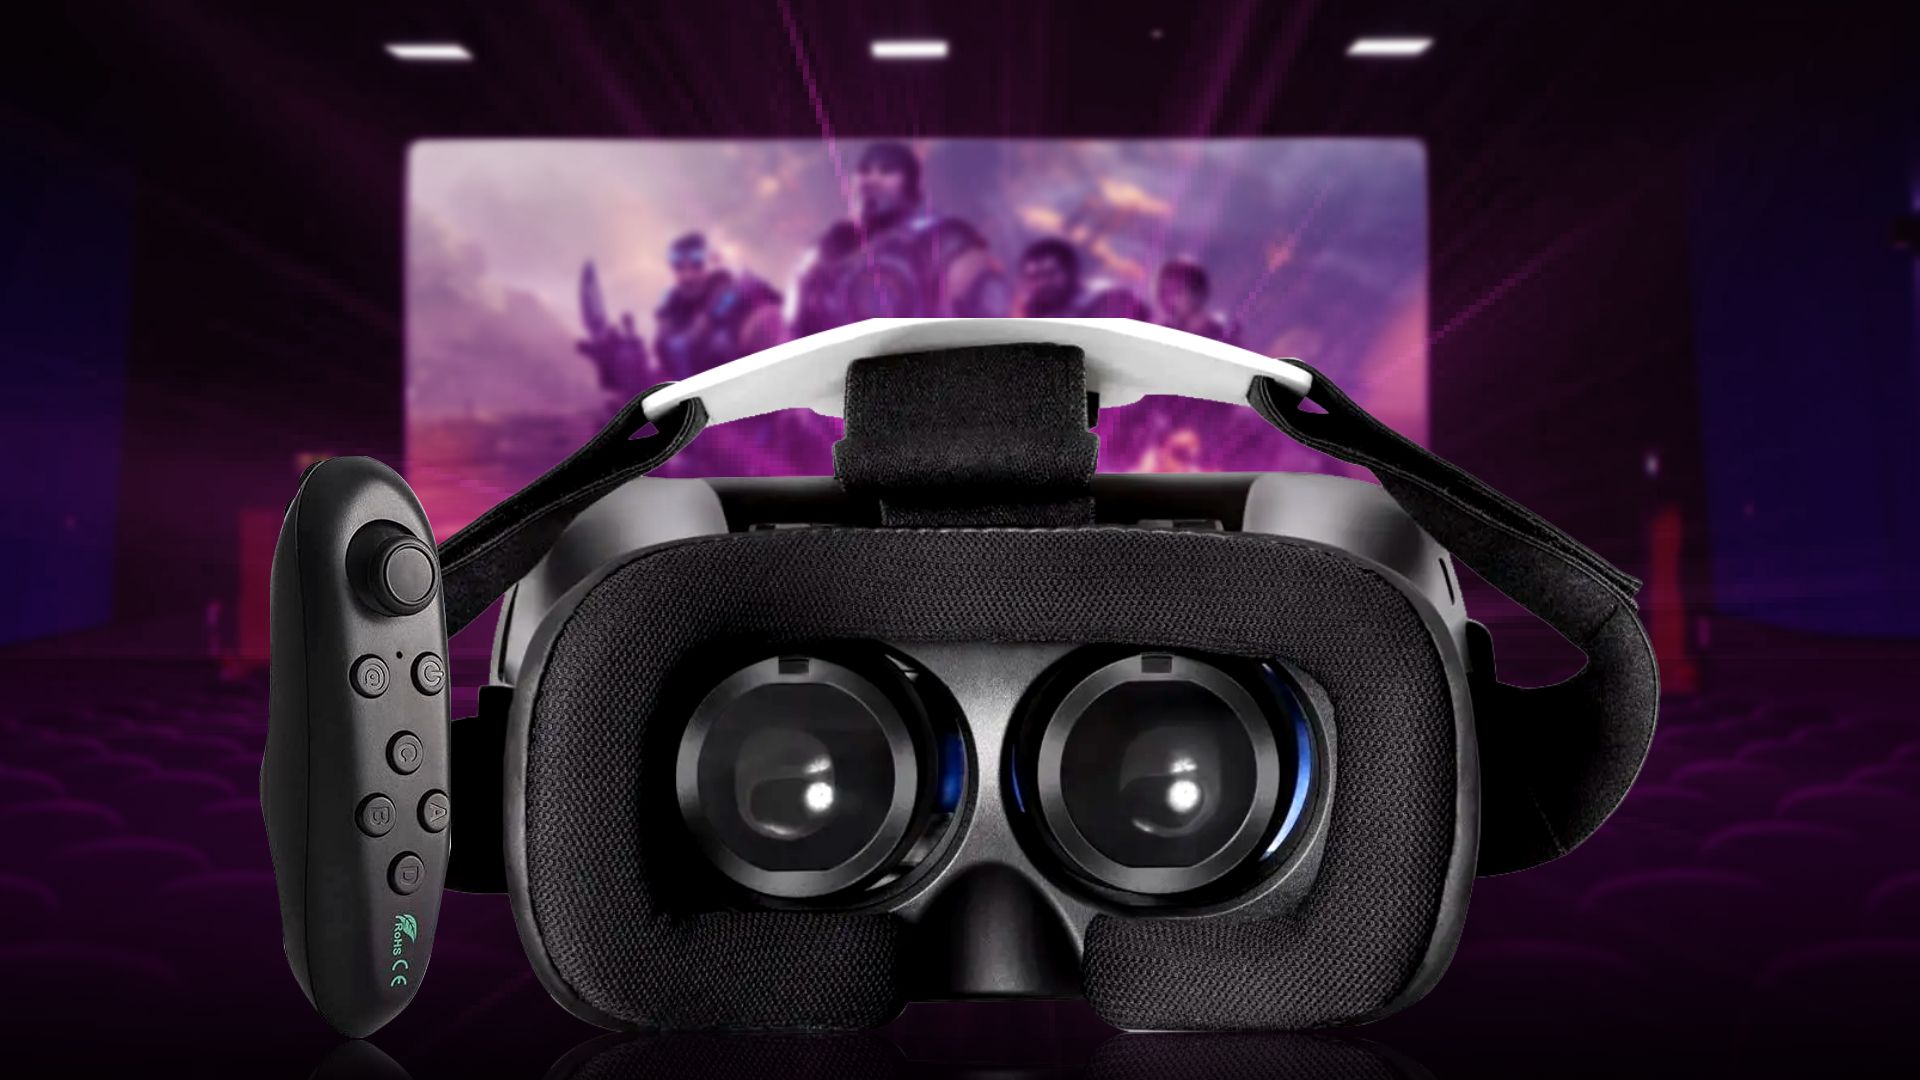 Atlasonix VR headset